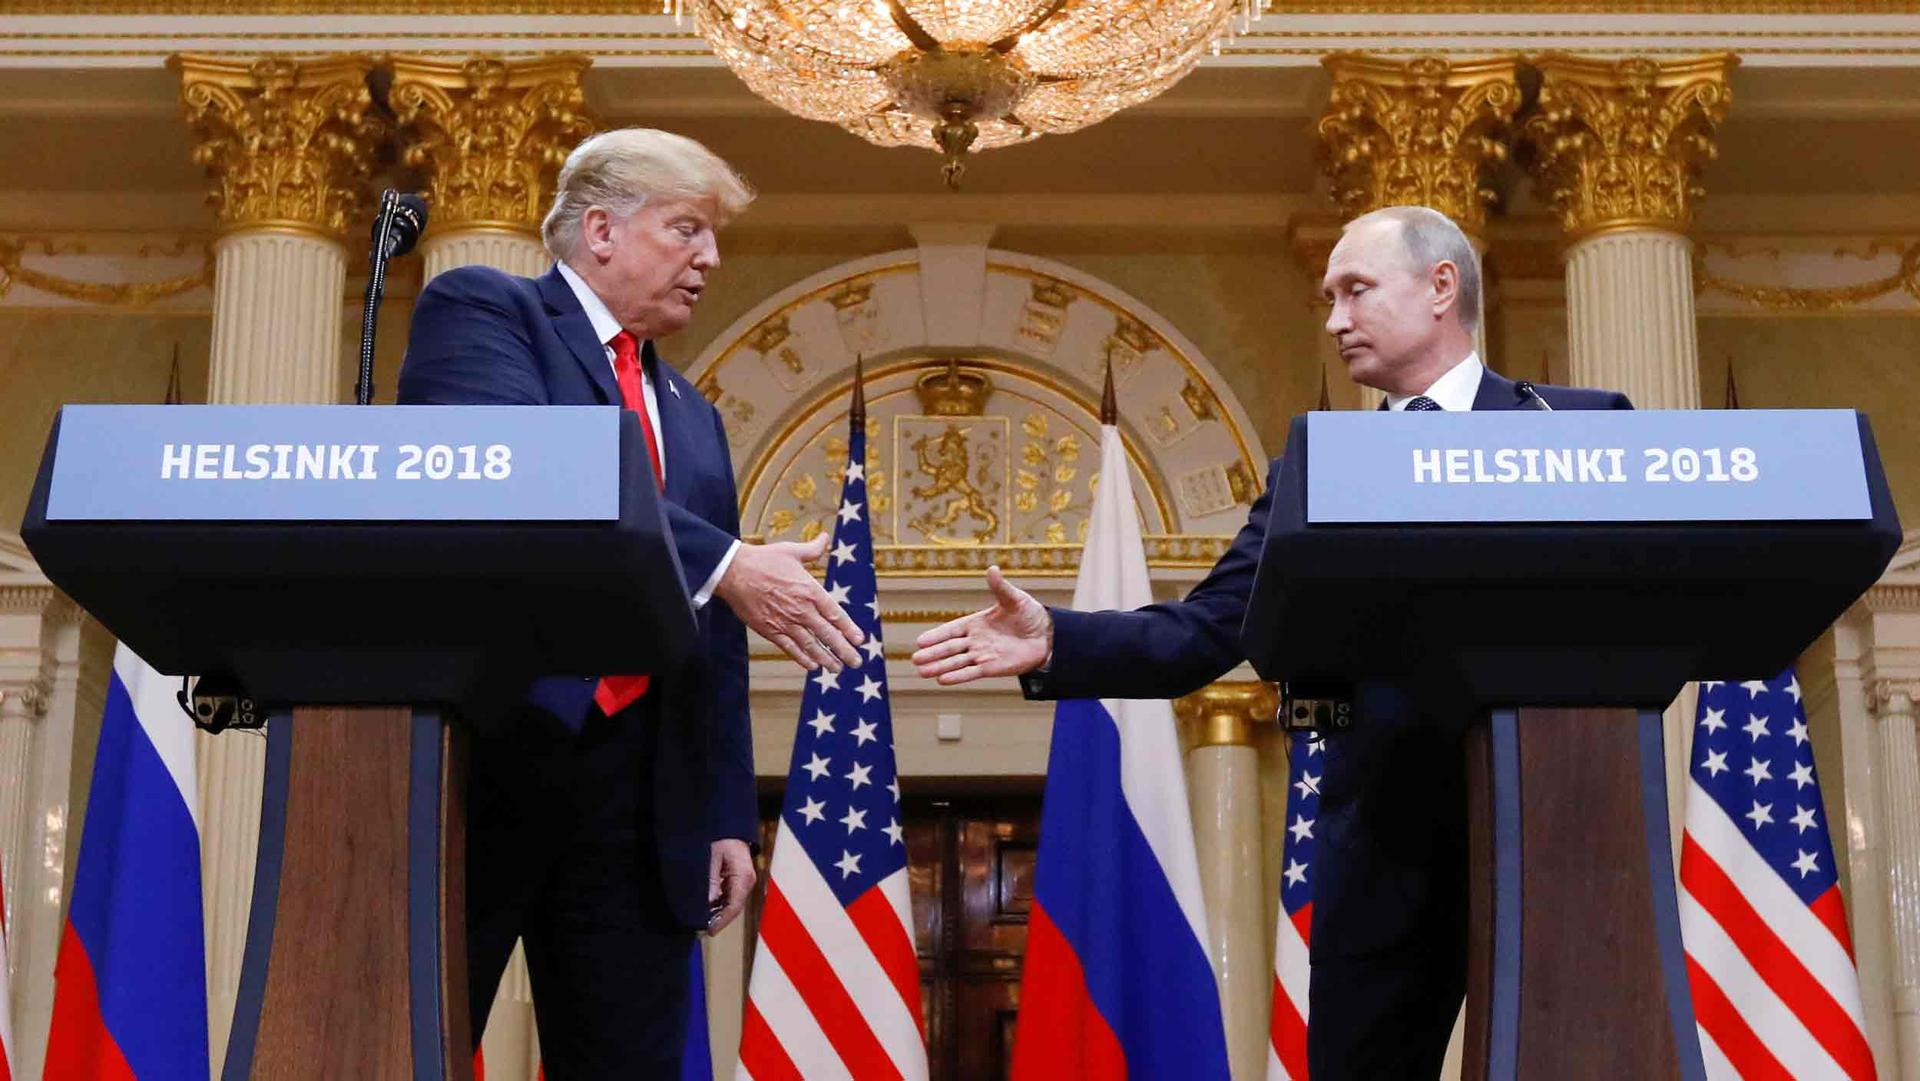 Donald Trump and Vladimir Putin shake hands behind two podiums reading Helsinki 2018